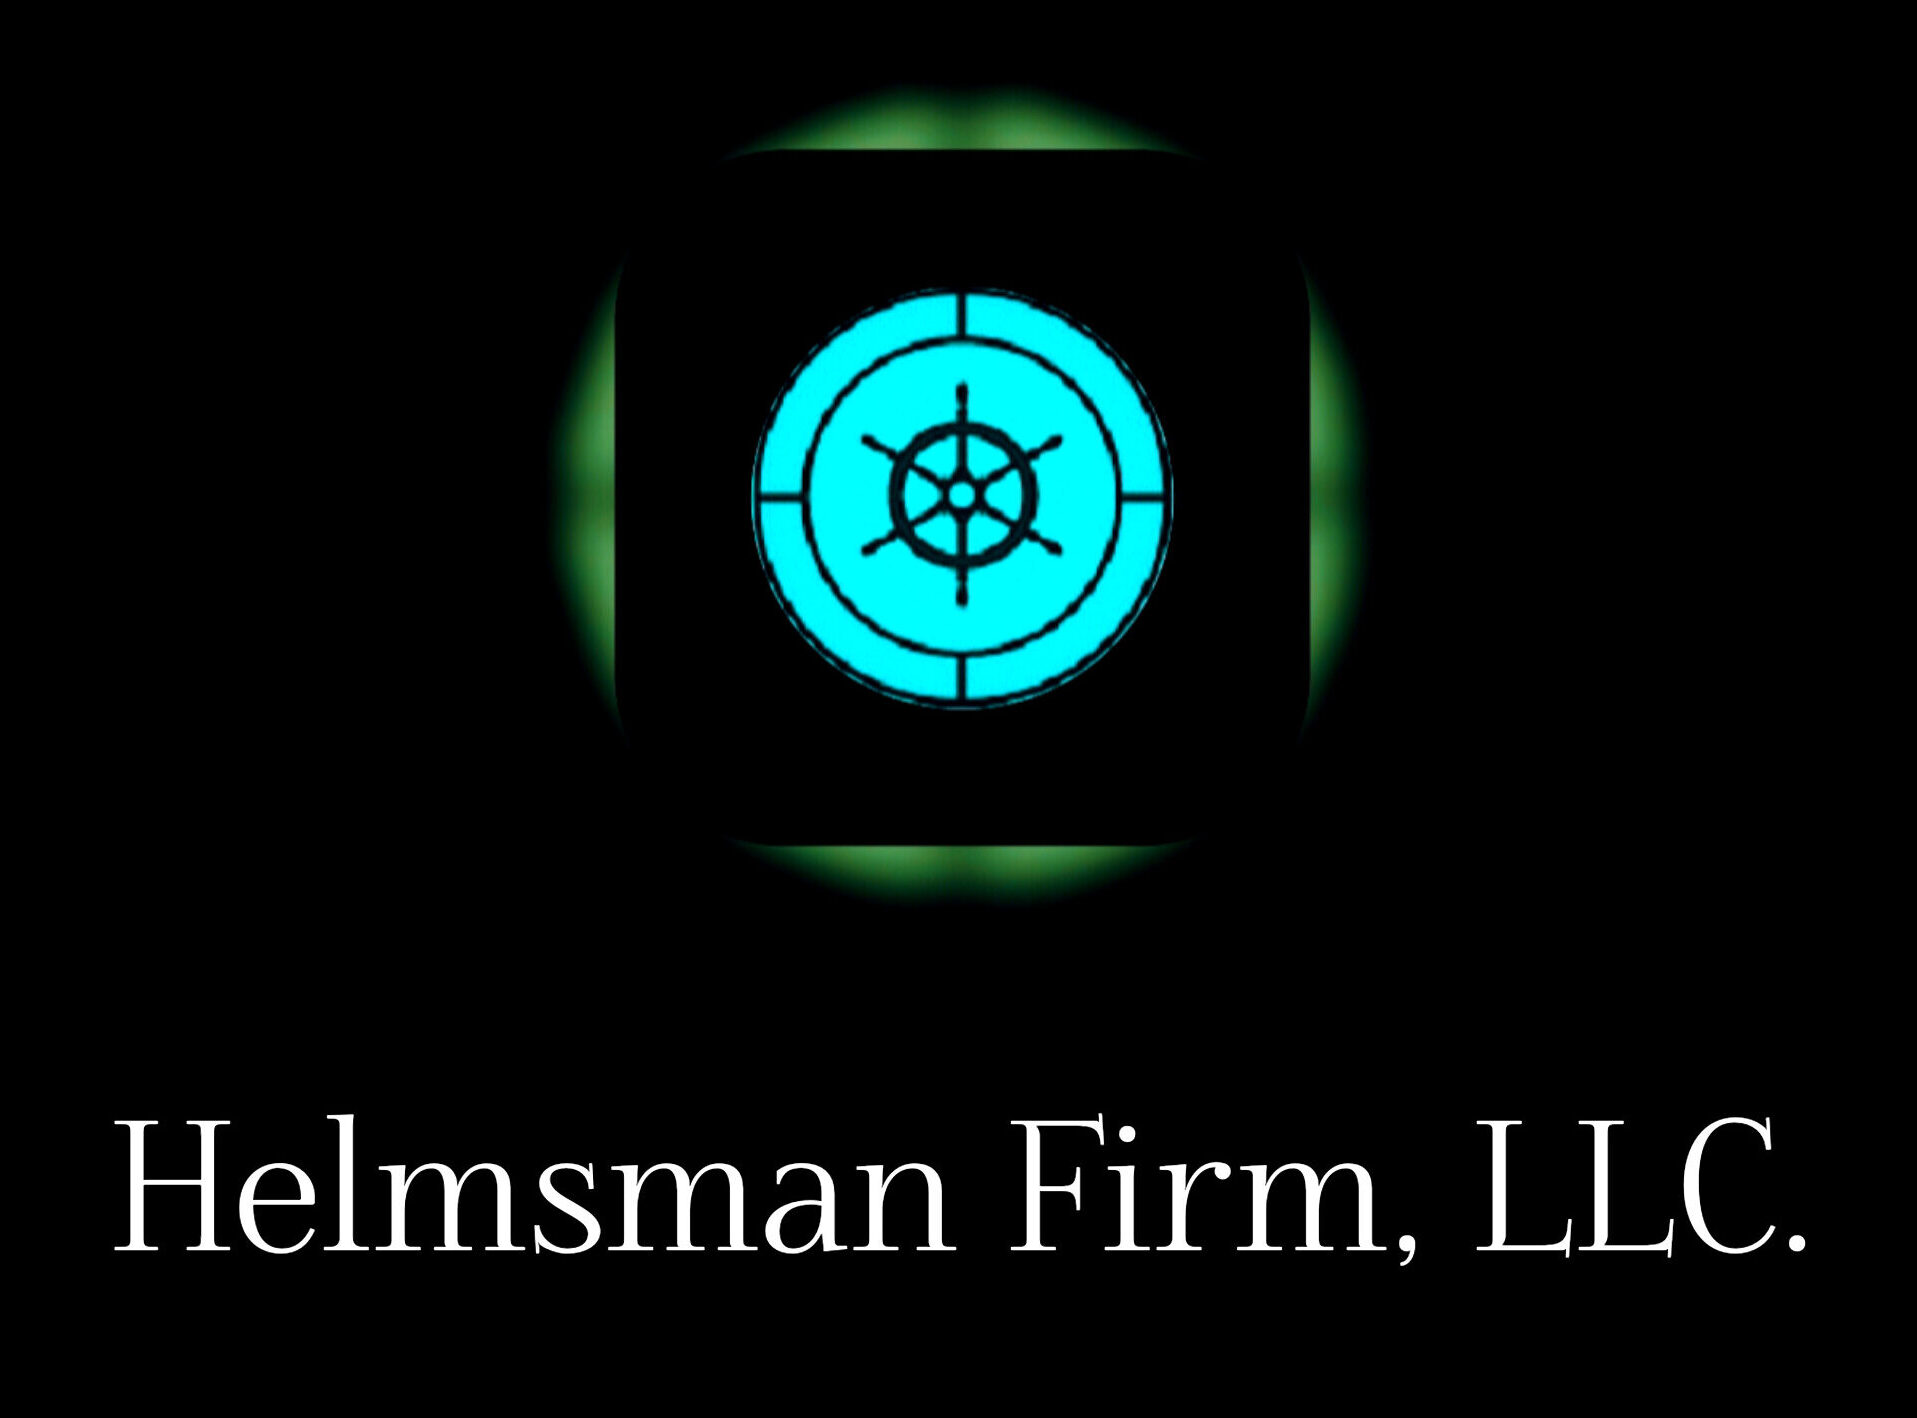 Helmsman Firm, LLC.